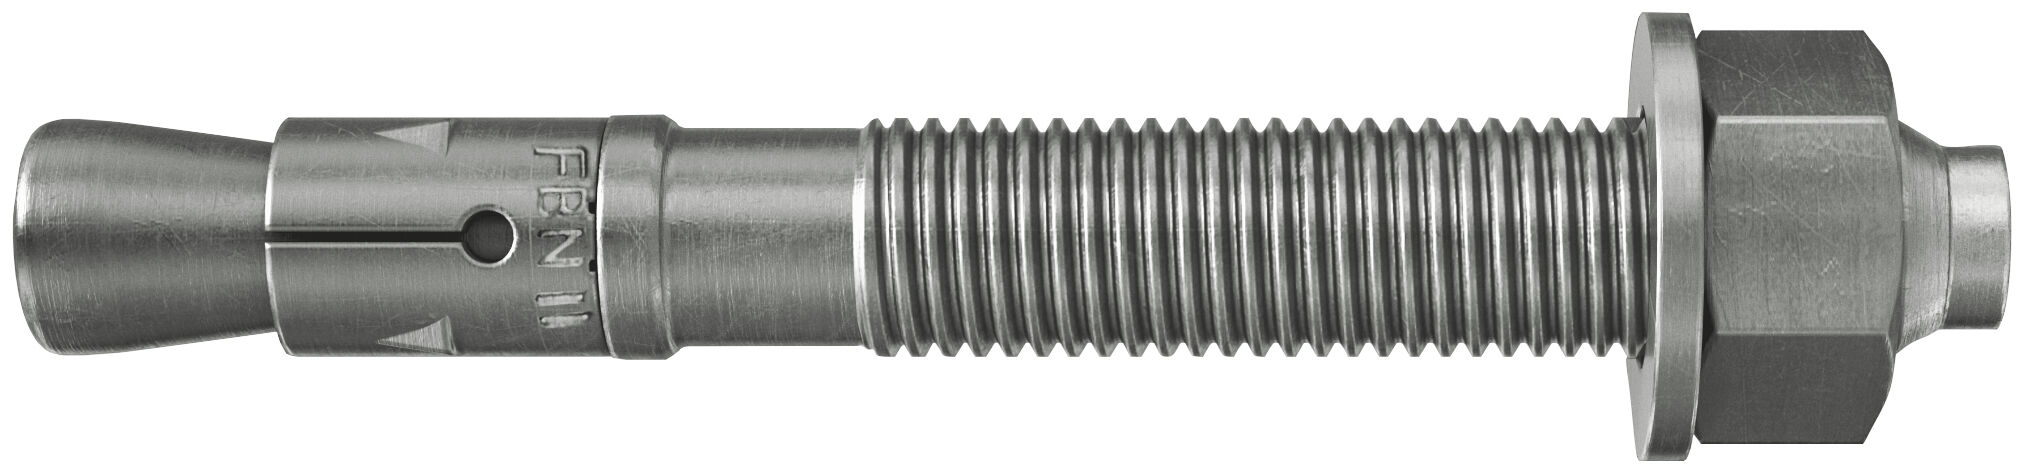 fischer bolt anchor FBN II 8/30 R stainless steel